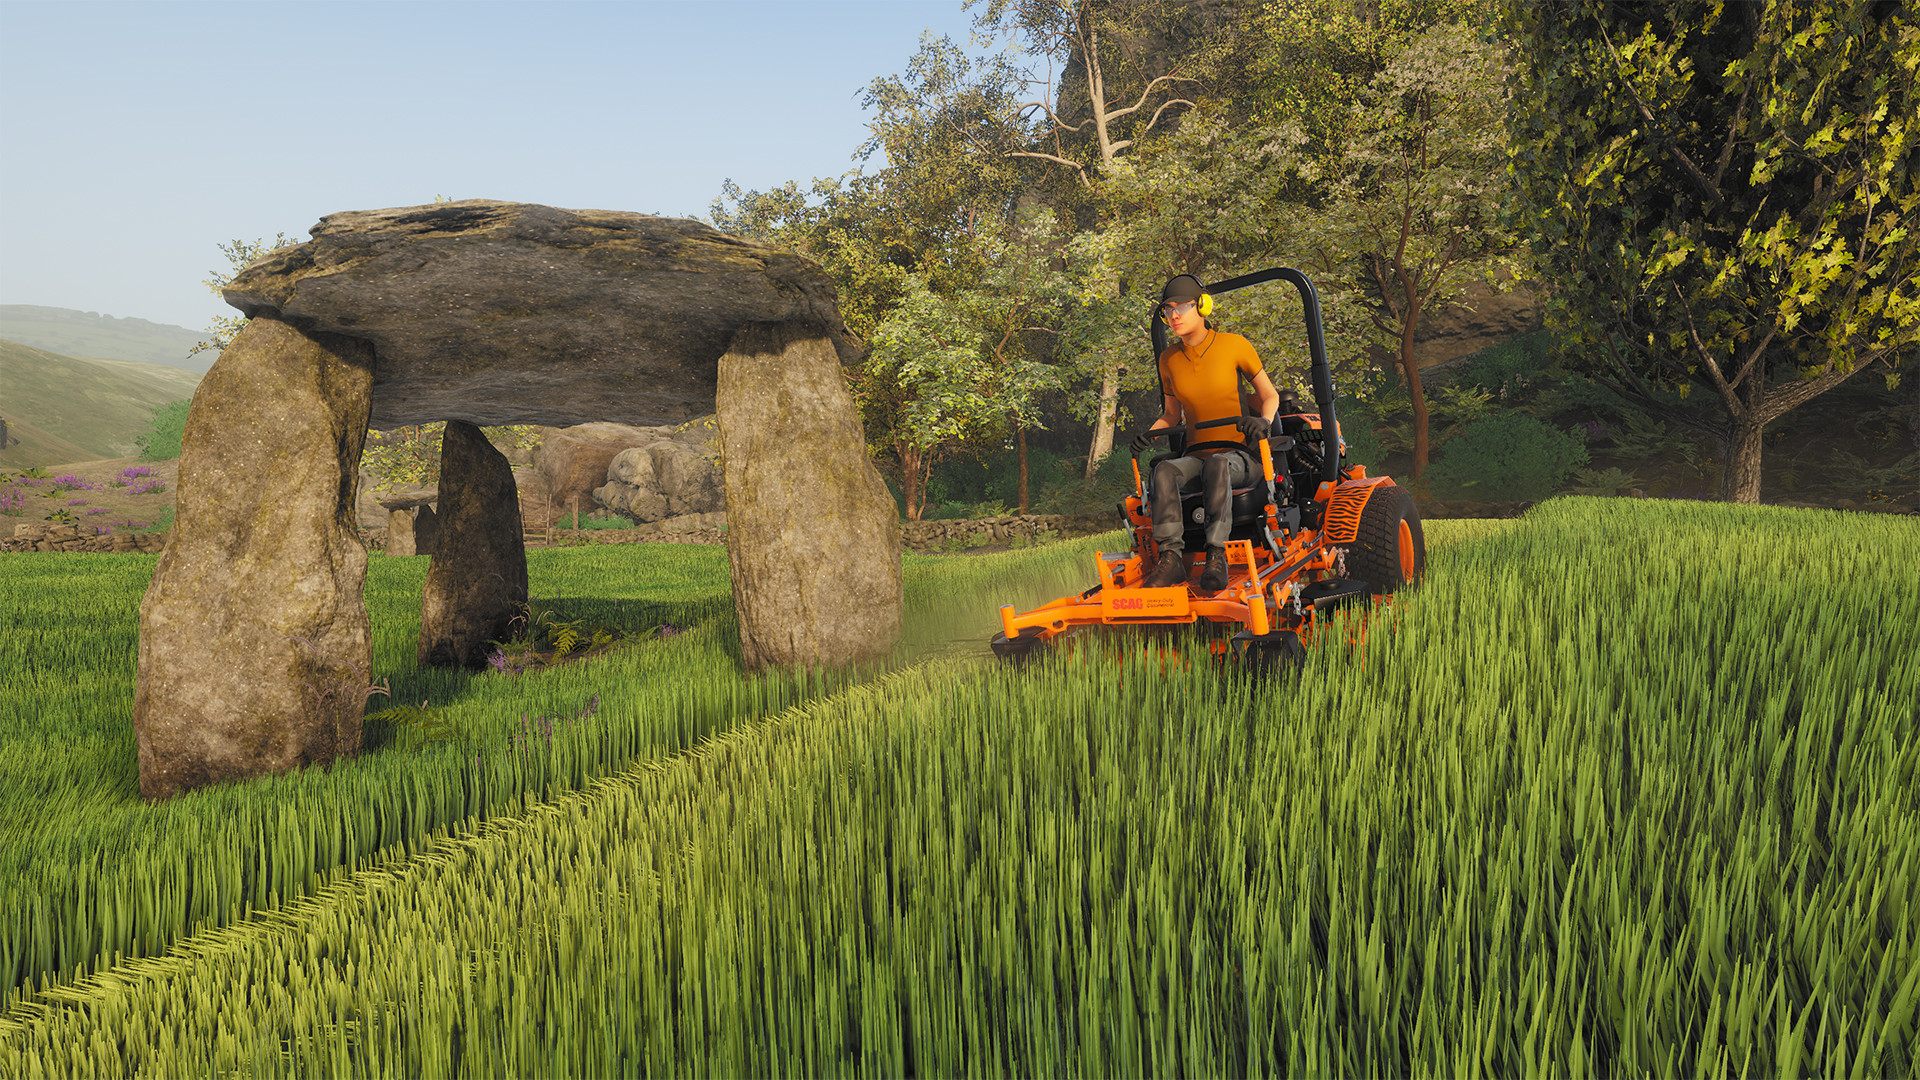 Lawn Mowing Simulator - Ancient Britain DLC Steam CD Key